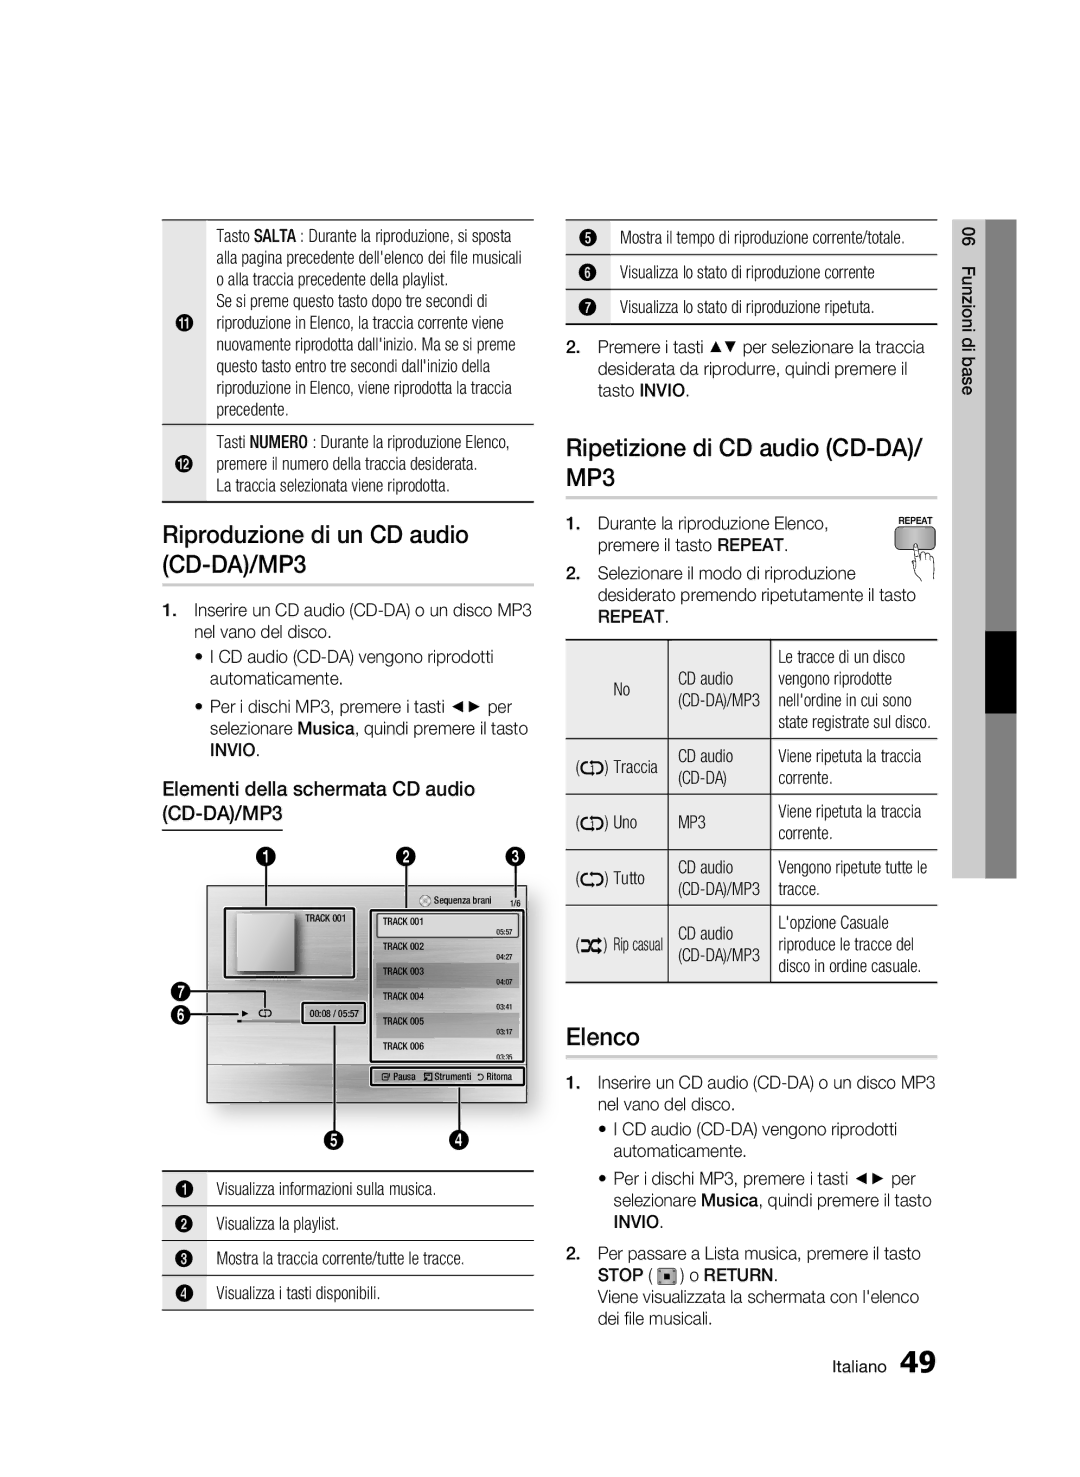 Samsung BD-C7500/XEF manual Riproduzione di un CD audio CD-DA/MP3, Ripetizione di CD audio CD-DA/ MP3, Elenco, Repeat 